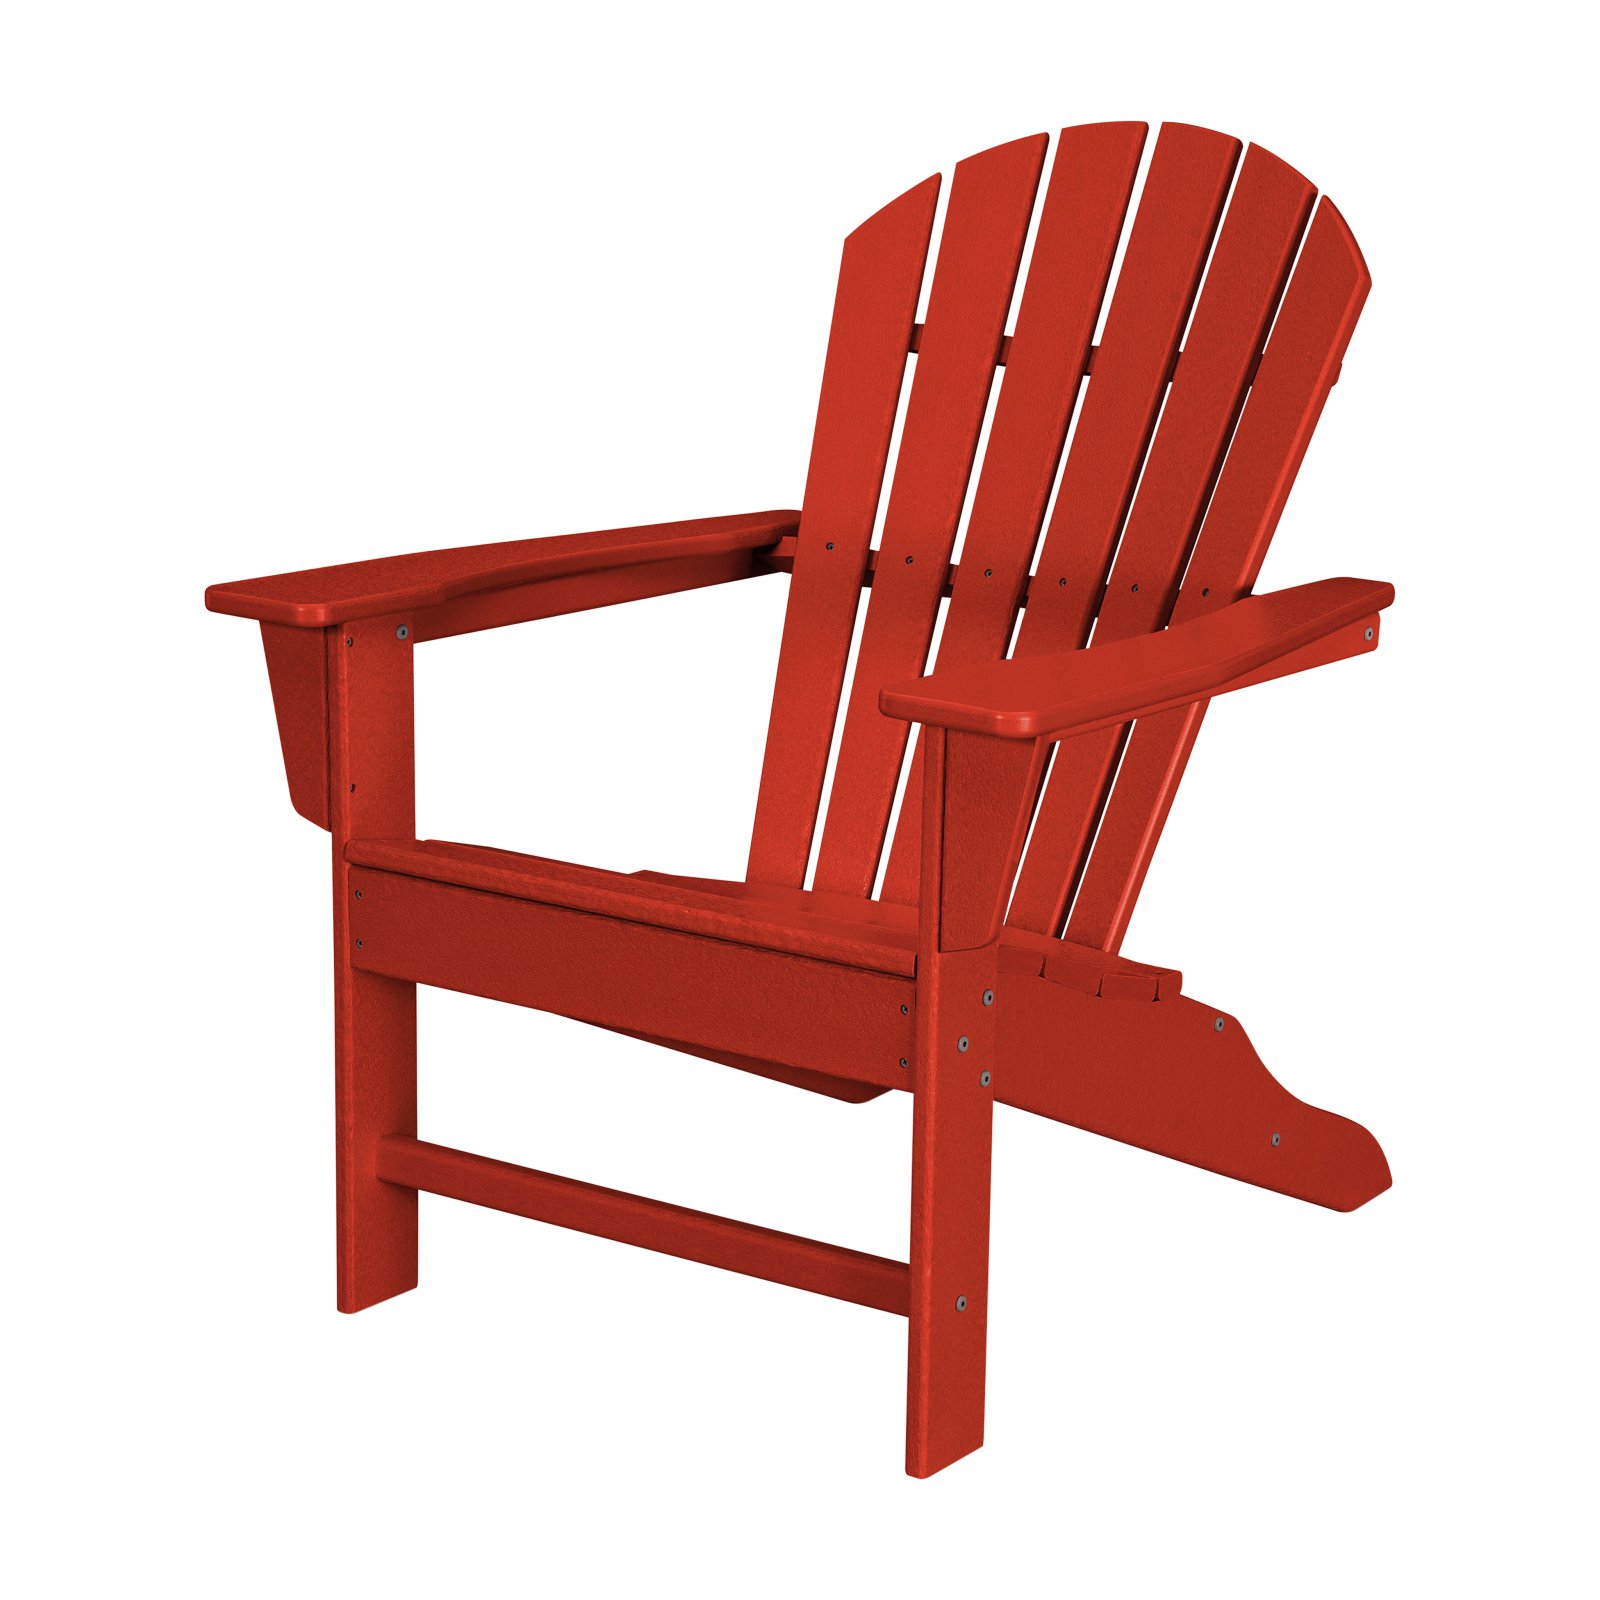 POLYWOOD South Beach Adirondack Chair - image 2 of 2